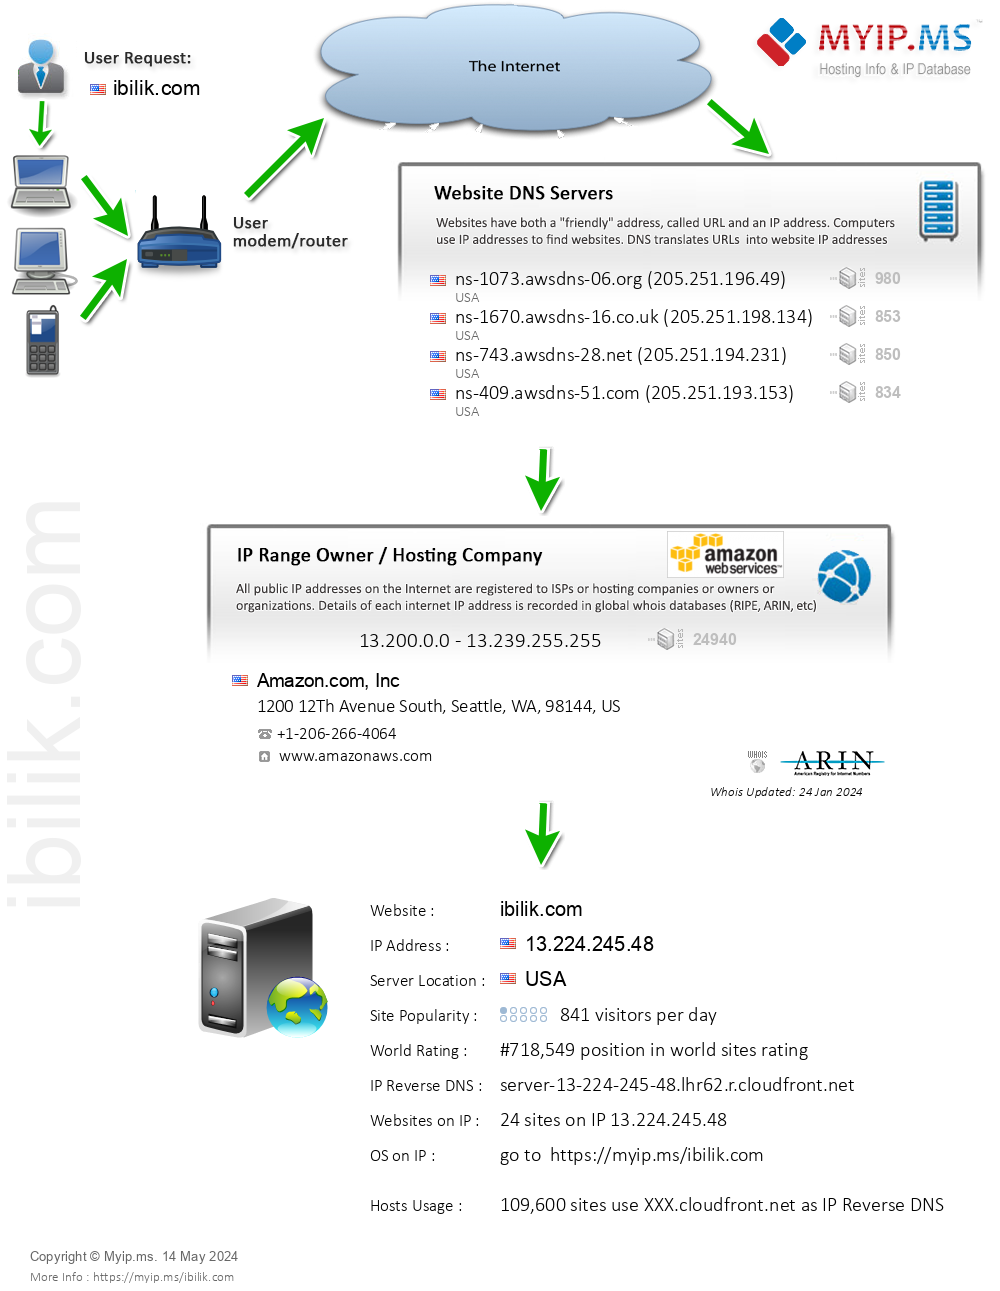 Ibilik.com - Website Hosting Visual IP Diagram